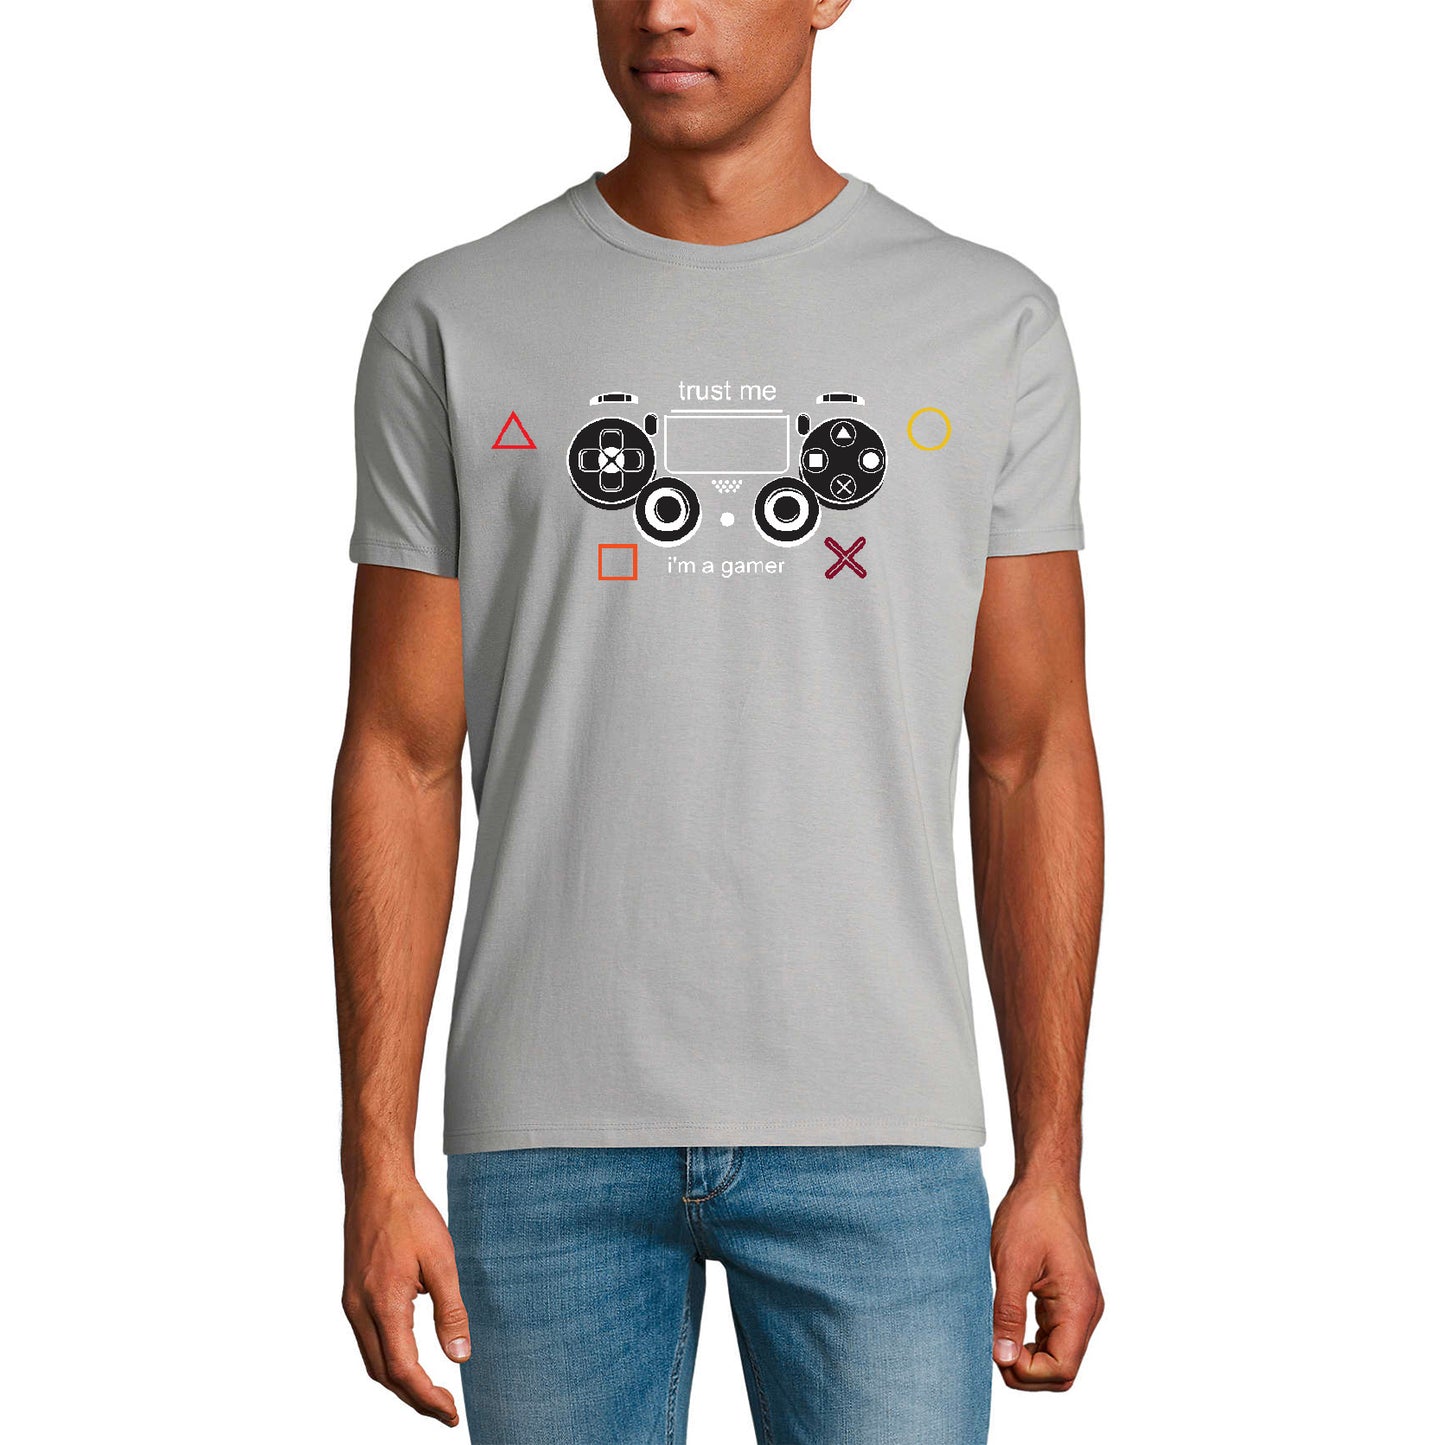 ULTRABASIC Men's Gaming T-Shirt Trust Me I'm a Gamer - Game Controller Gamepad Tee Shirt